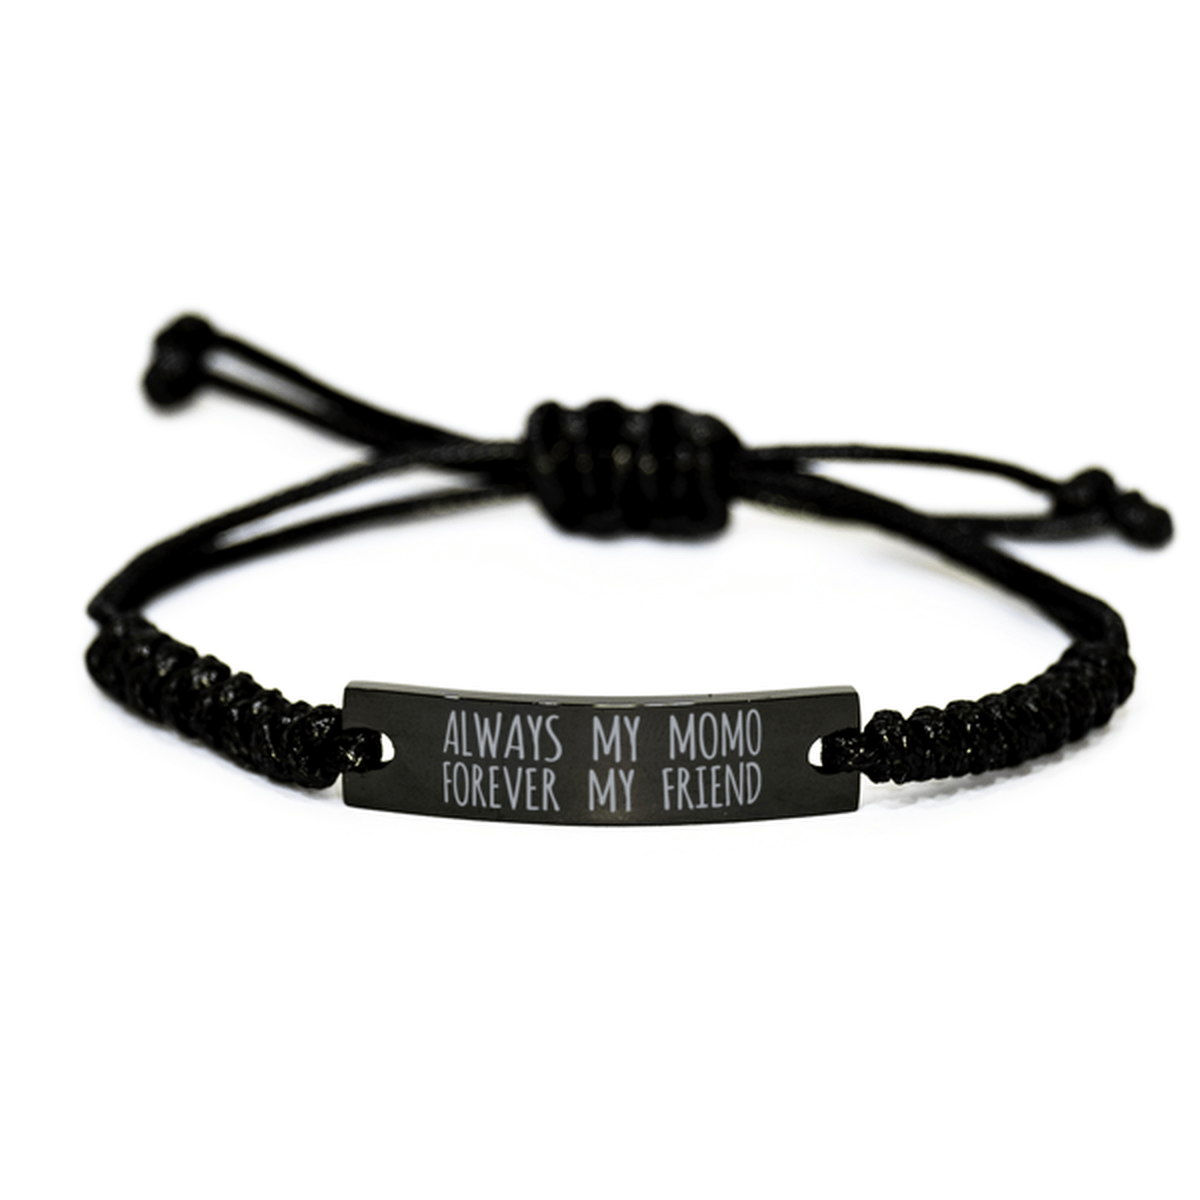 Inspirational Momo Black Rope Bracelet, Always My Momo Forever My Friend, Best Birthday Gifts For Family